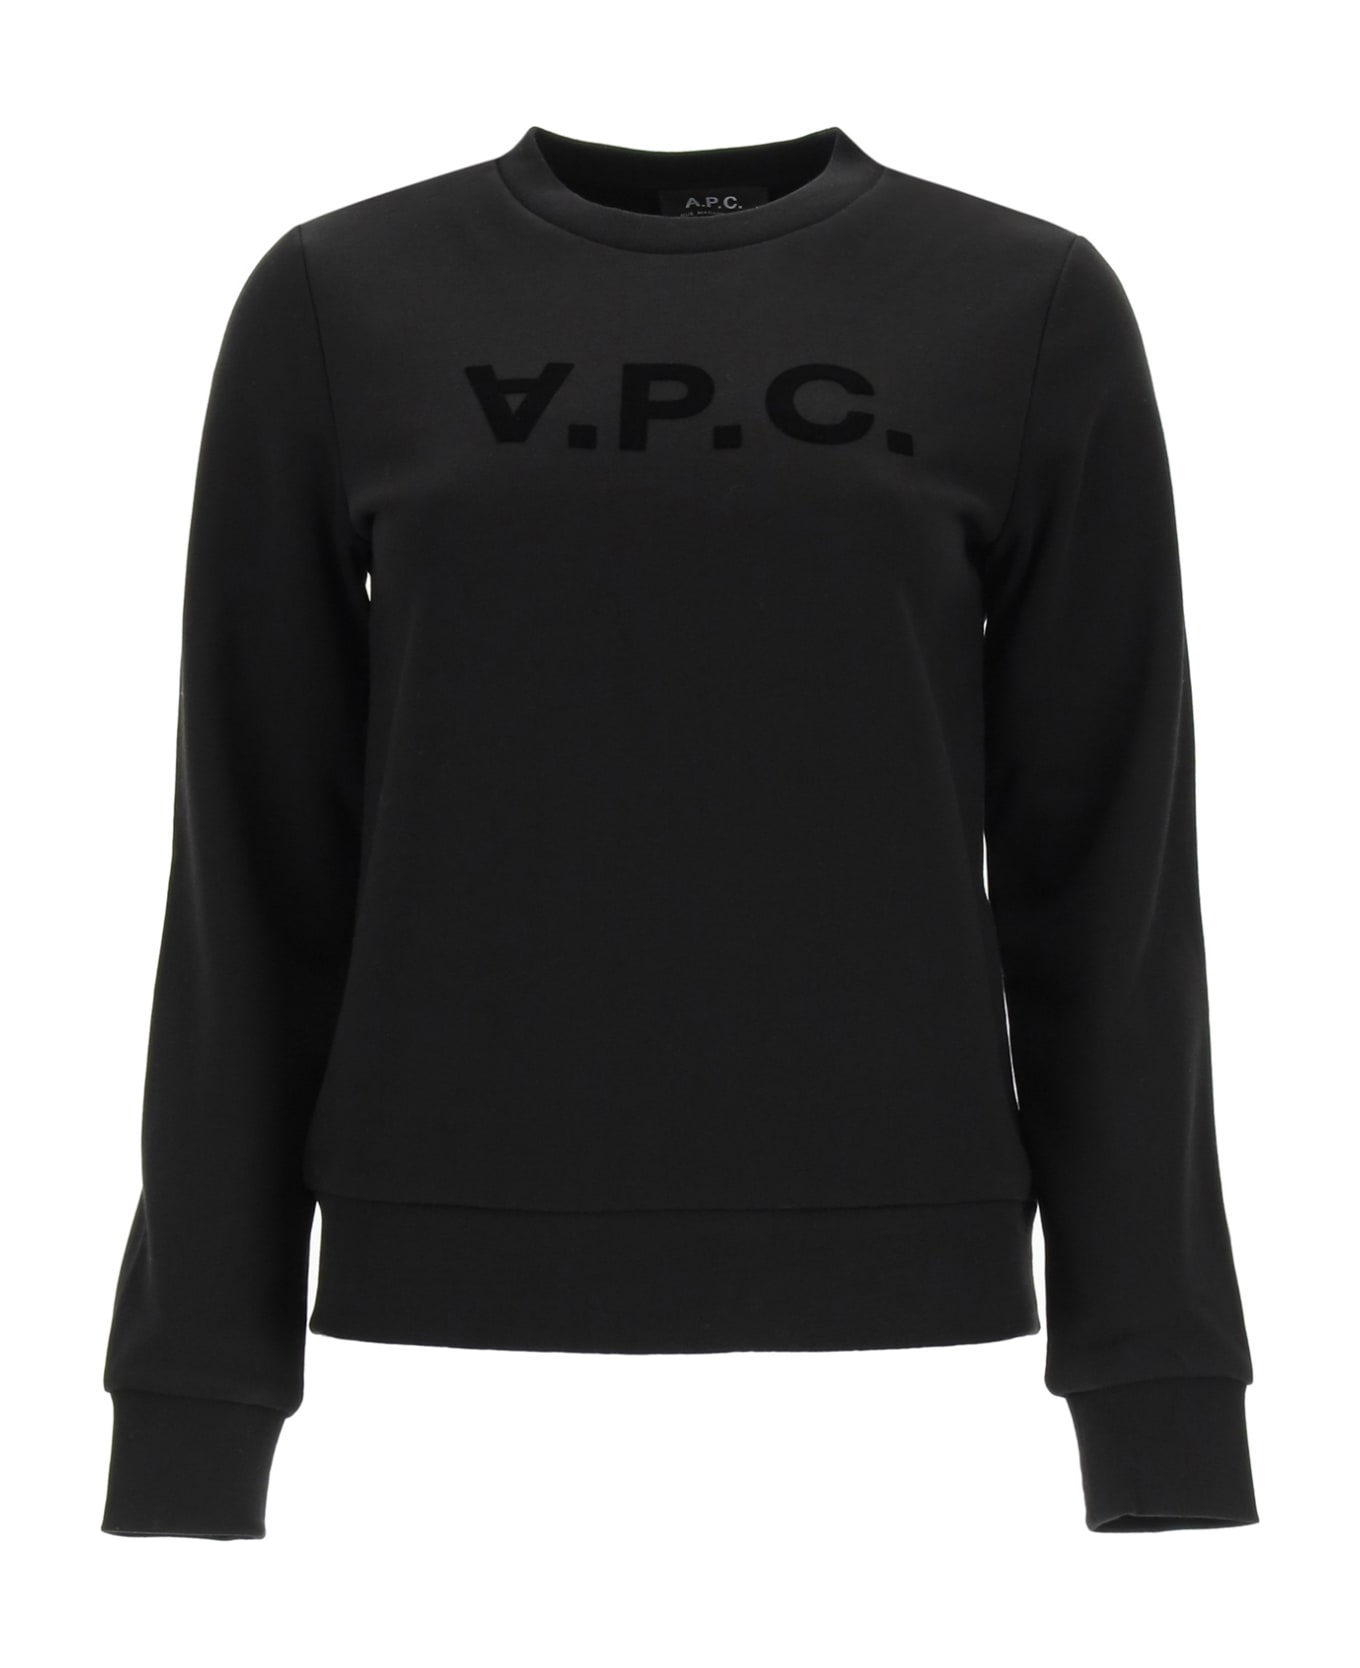 A.P.C. Viva Logo Sweatshirt - BLACK